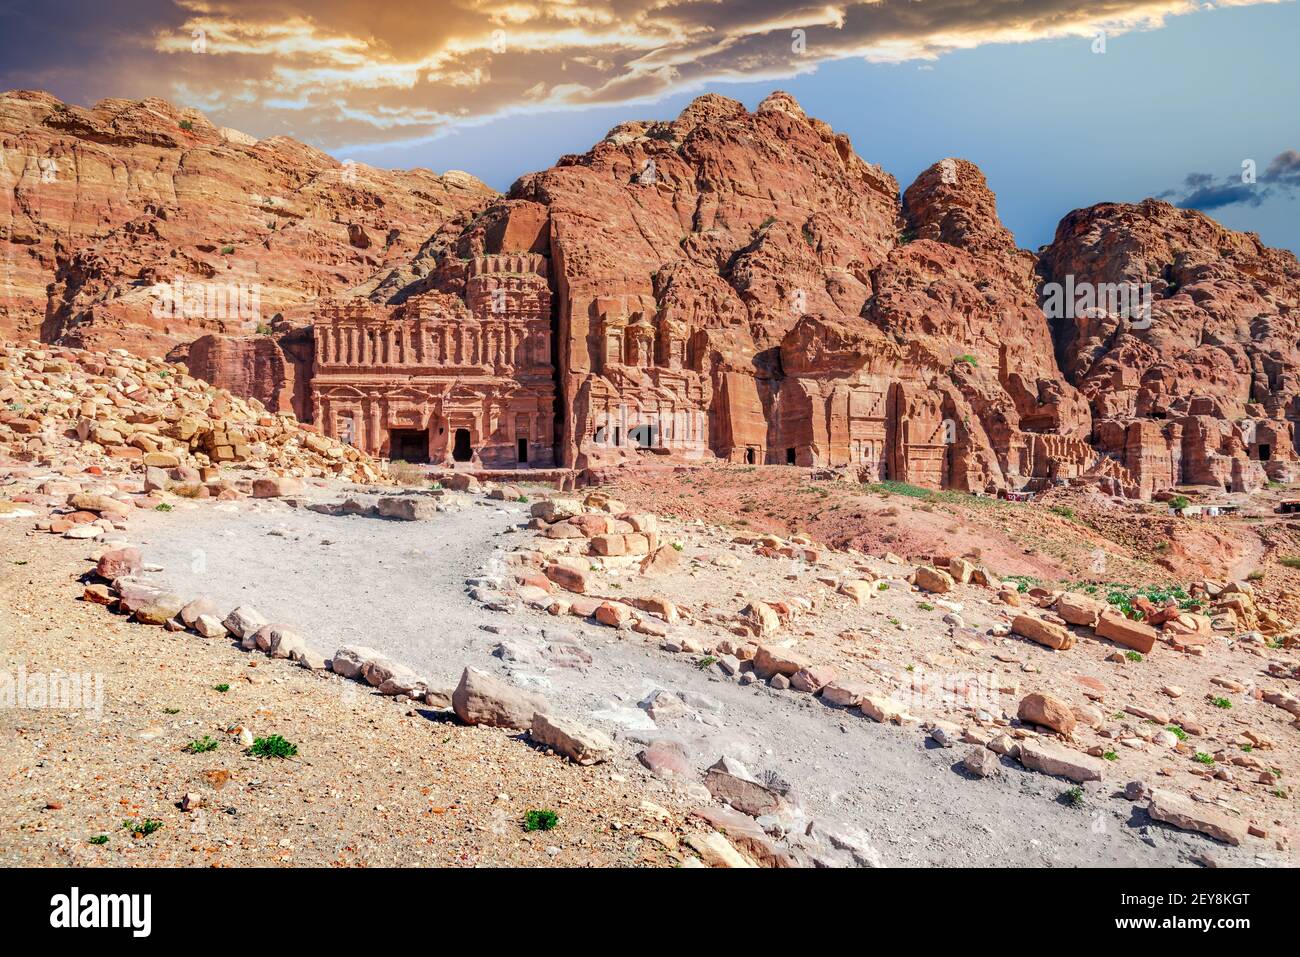 Petra, Wadi Musa in Jordan - Monumental world heritage of ancient Petra with Royal Tombs Stock Photo